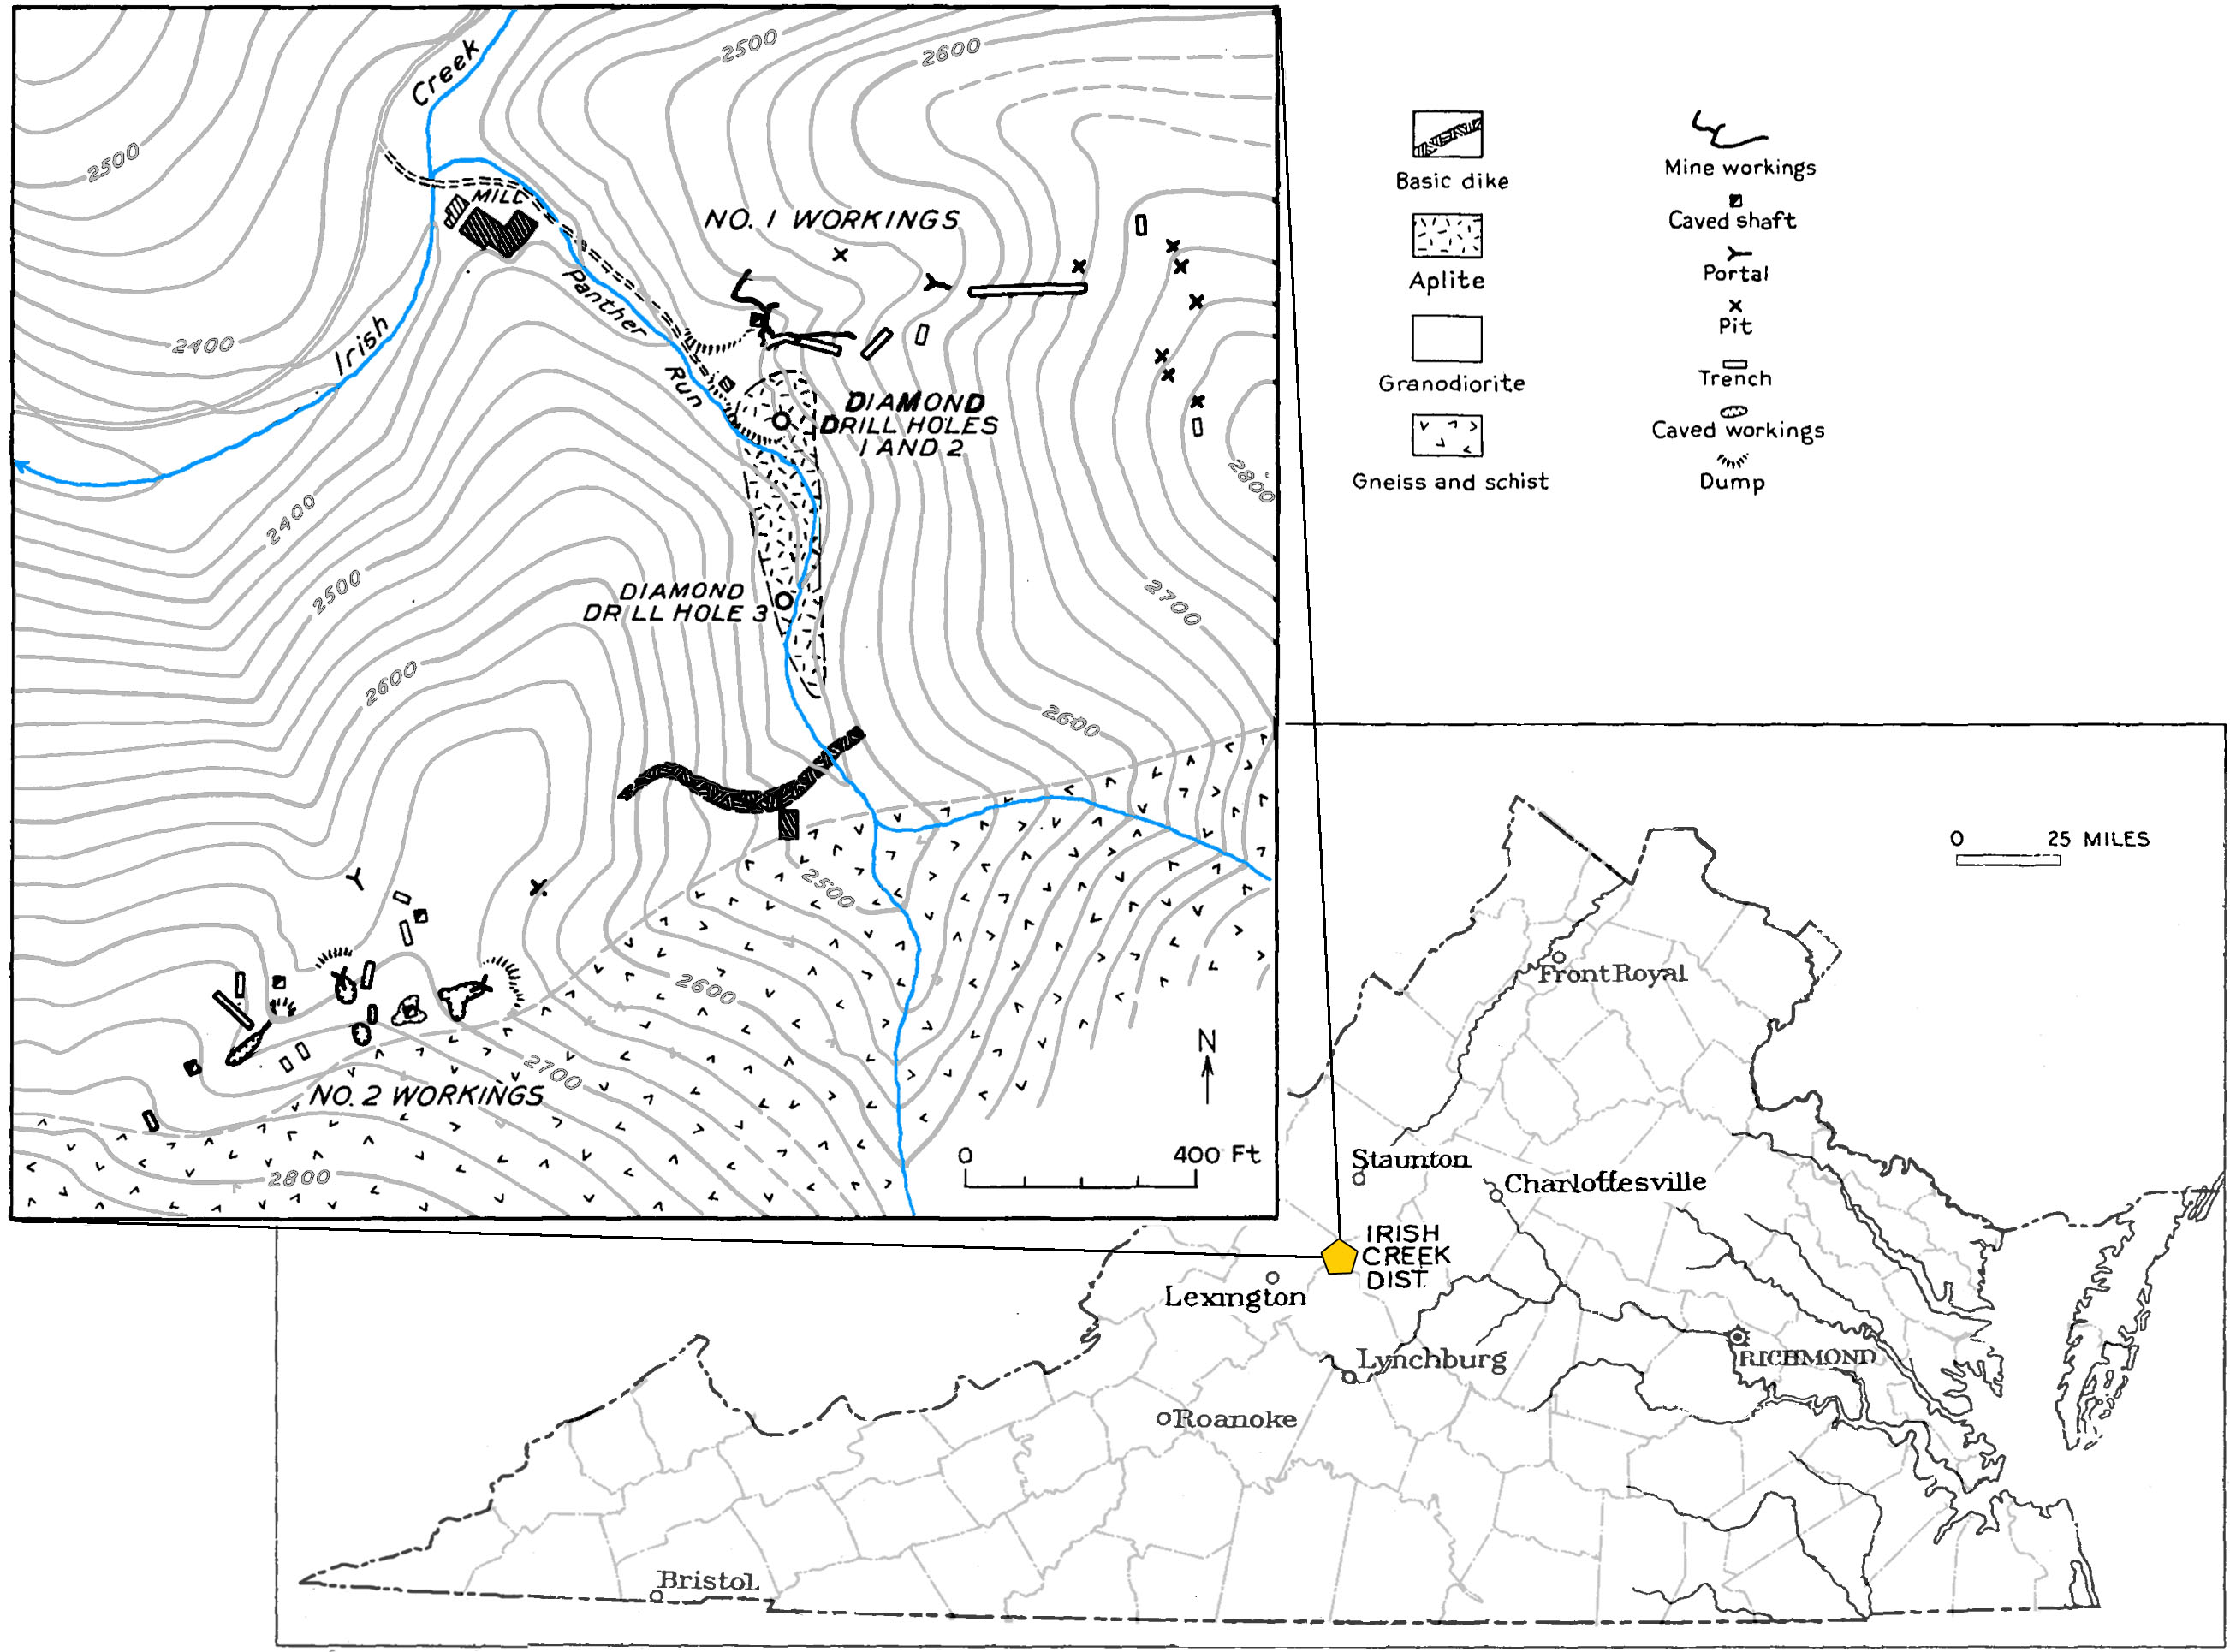 The Irish Creek Mining District of Virginia